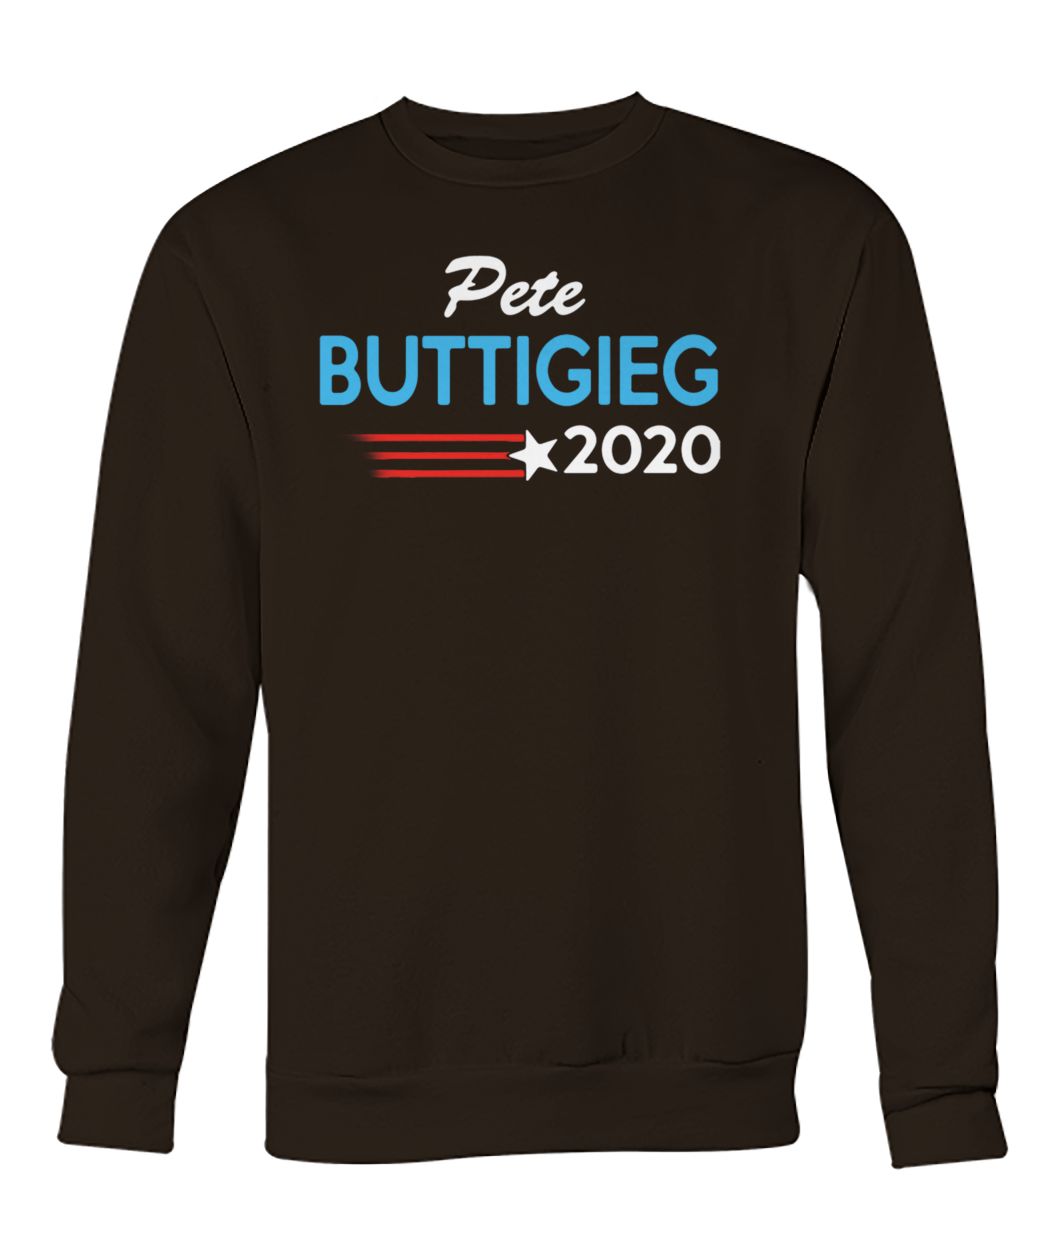 Pete buttigieg for president 2020 crew neck sweatshirt